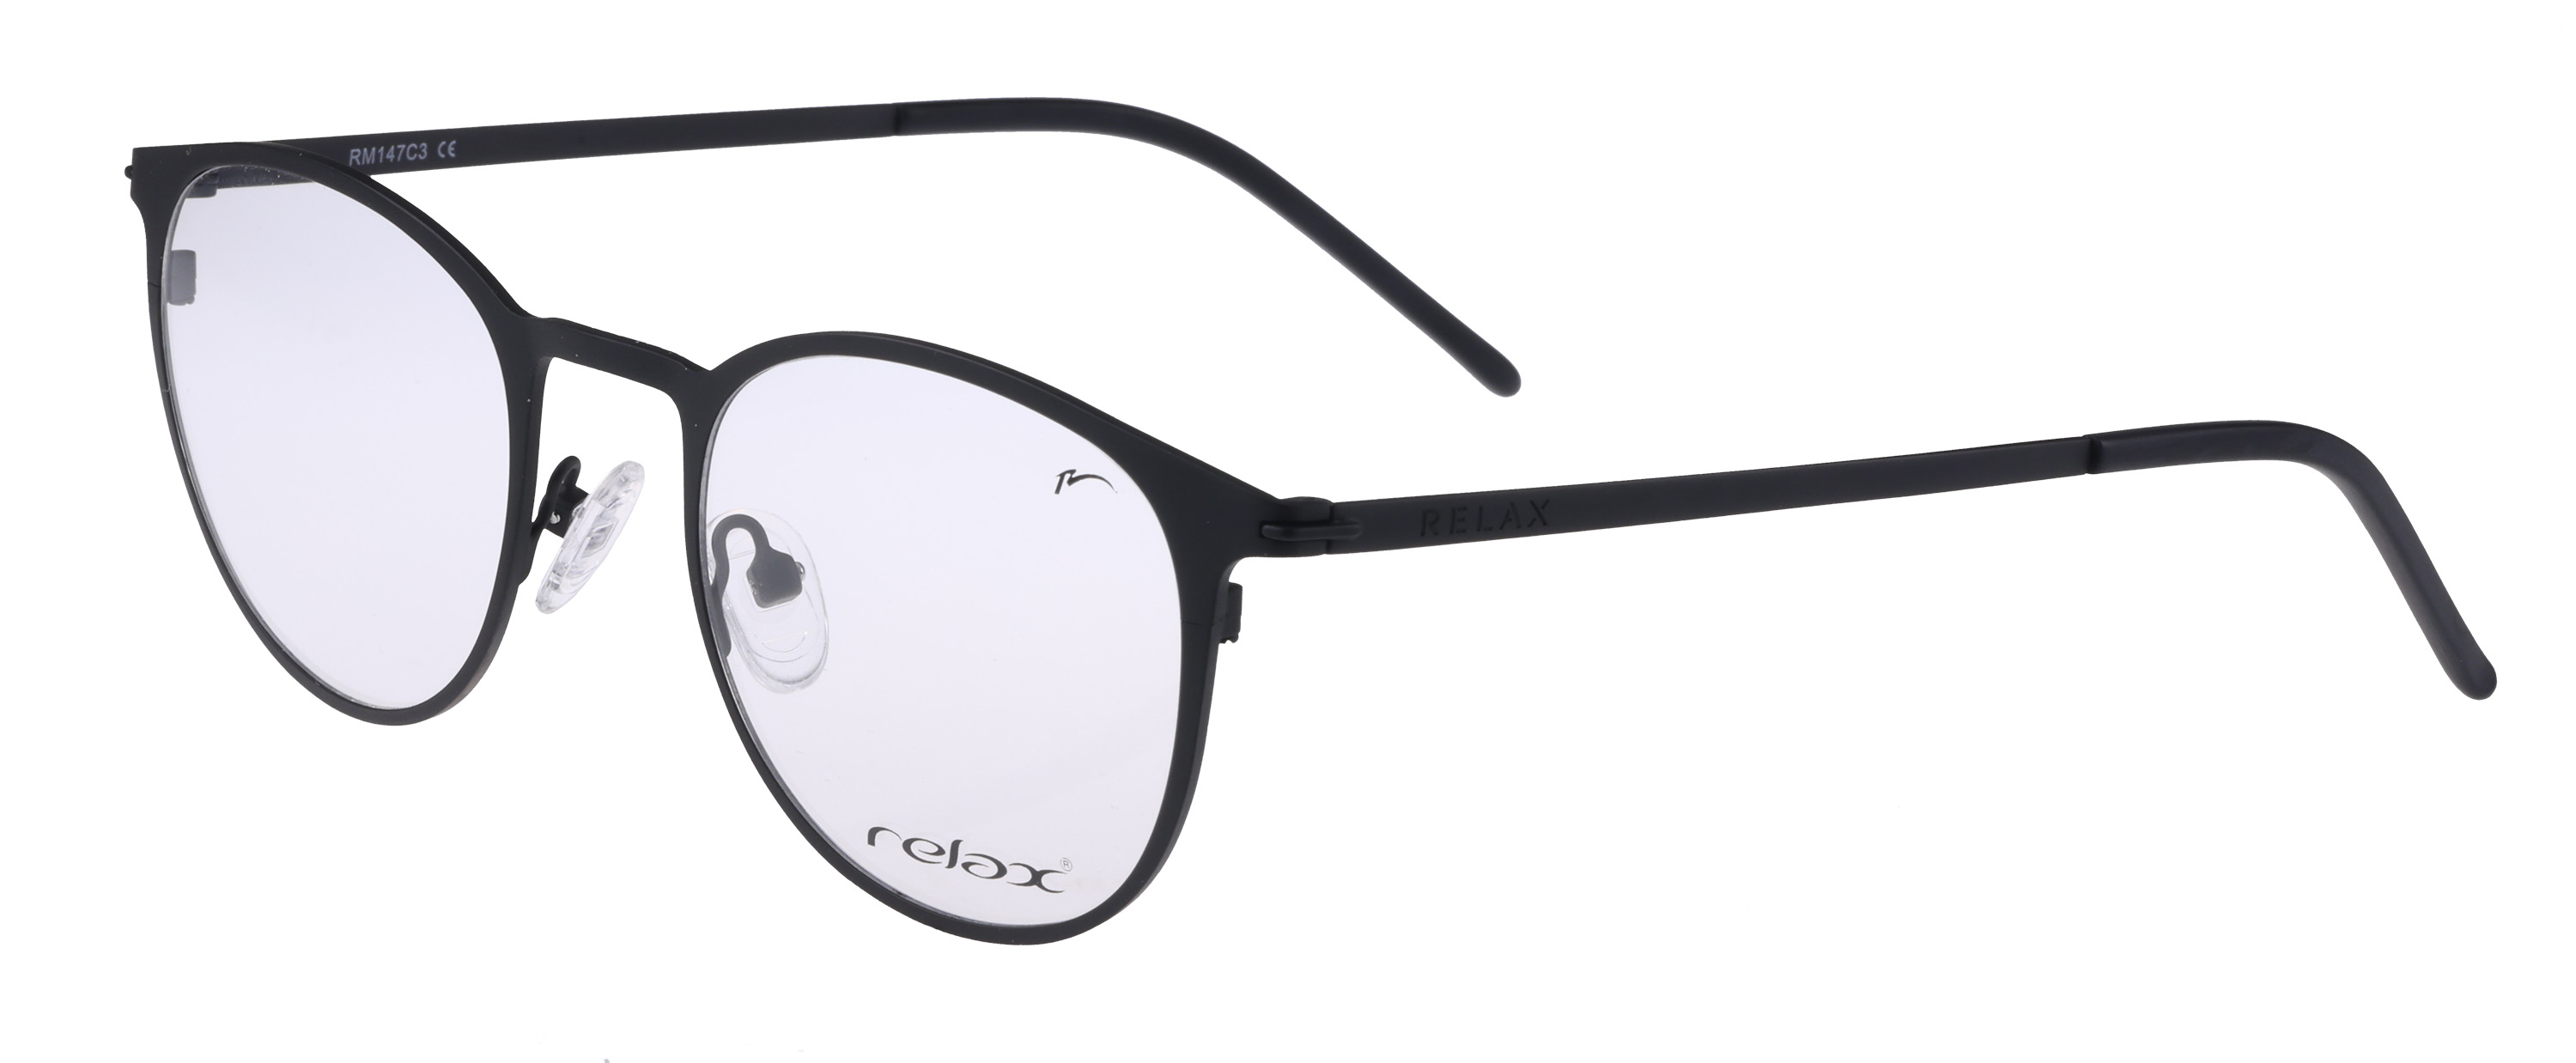 Dioptrické brýle Relax Pells RM147C3 -